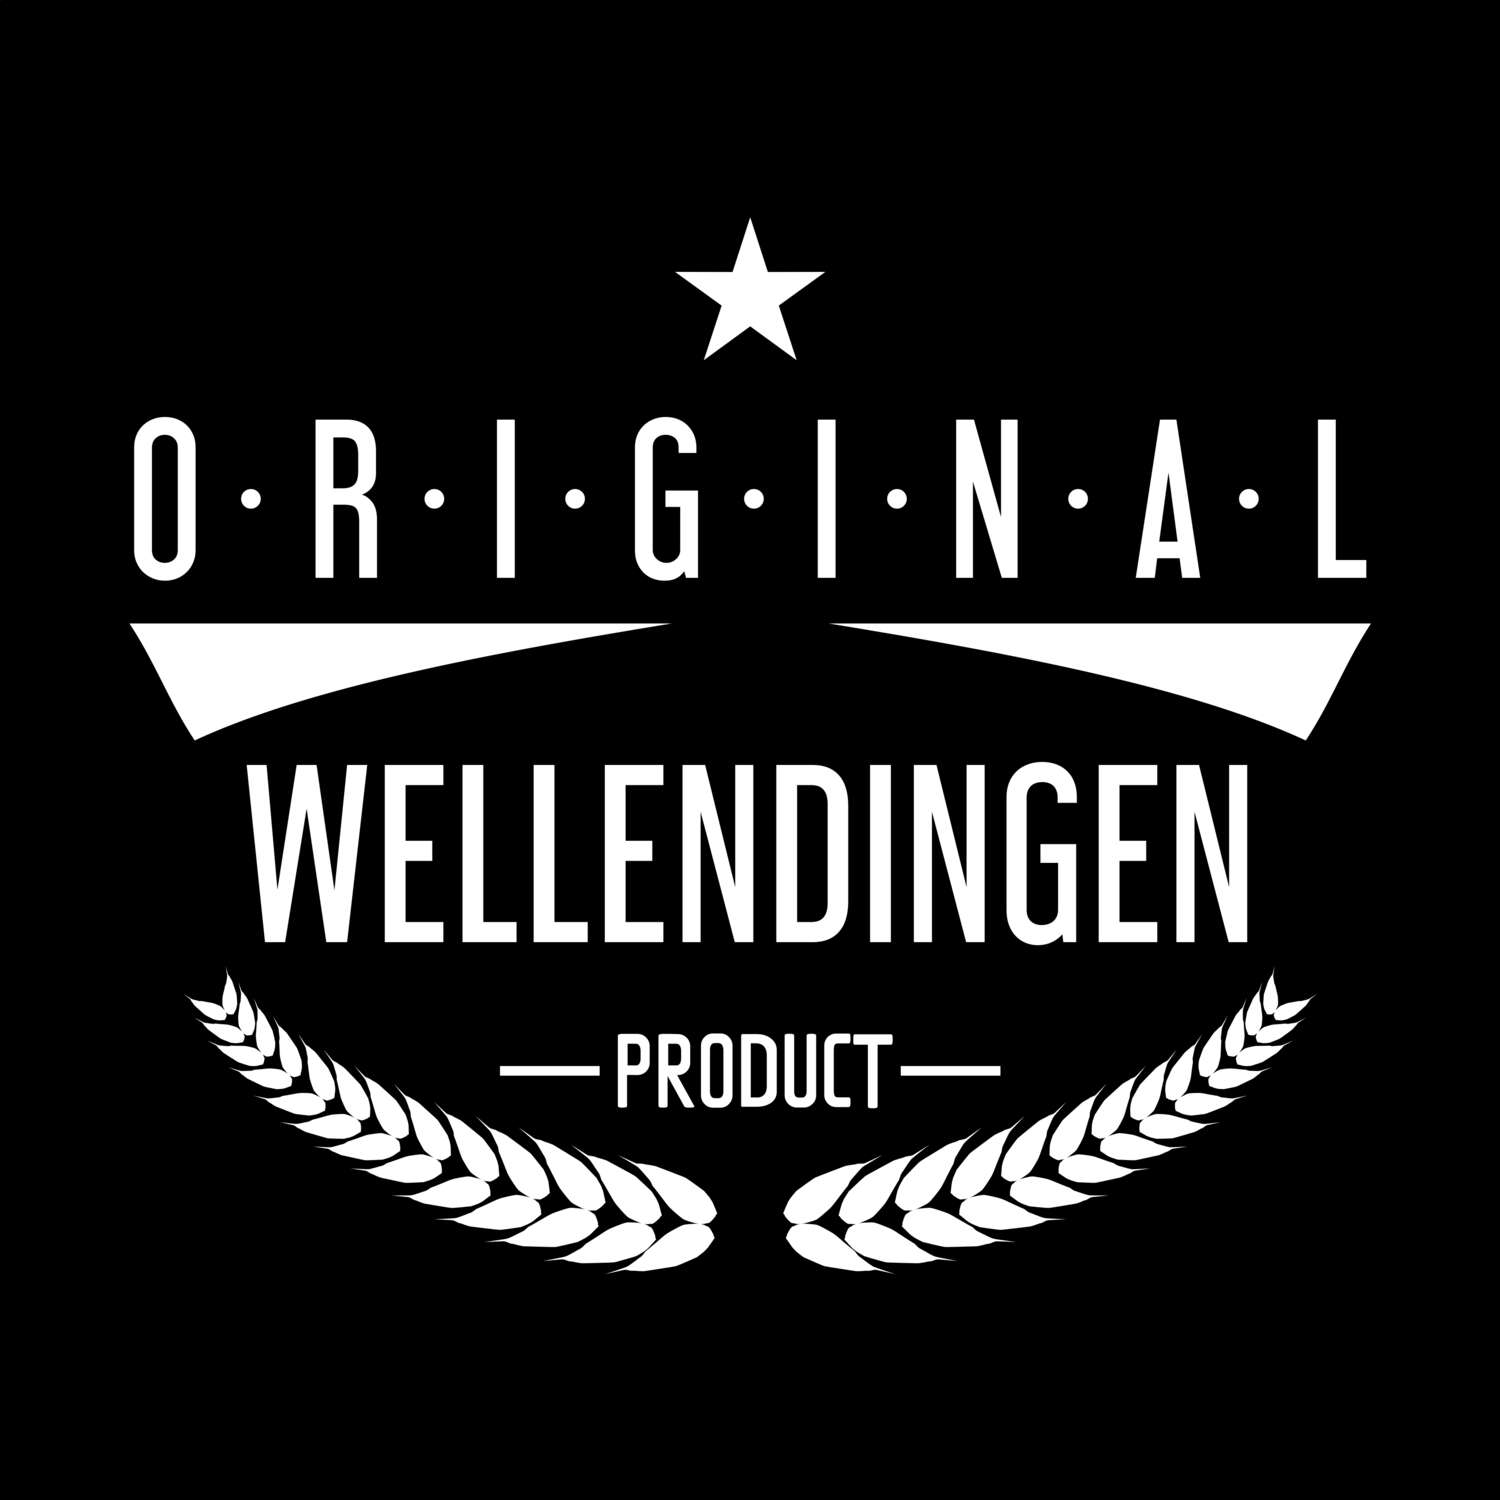 Wellendingen T-Shirt »Original Product«